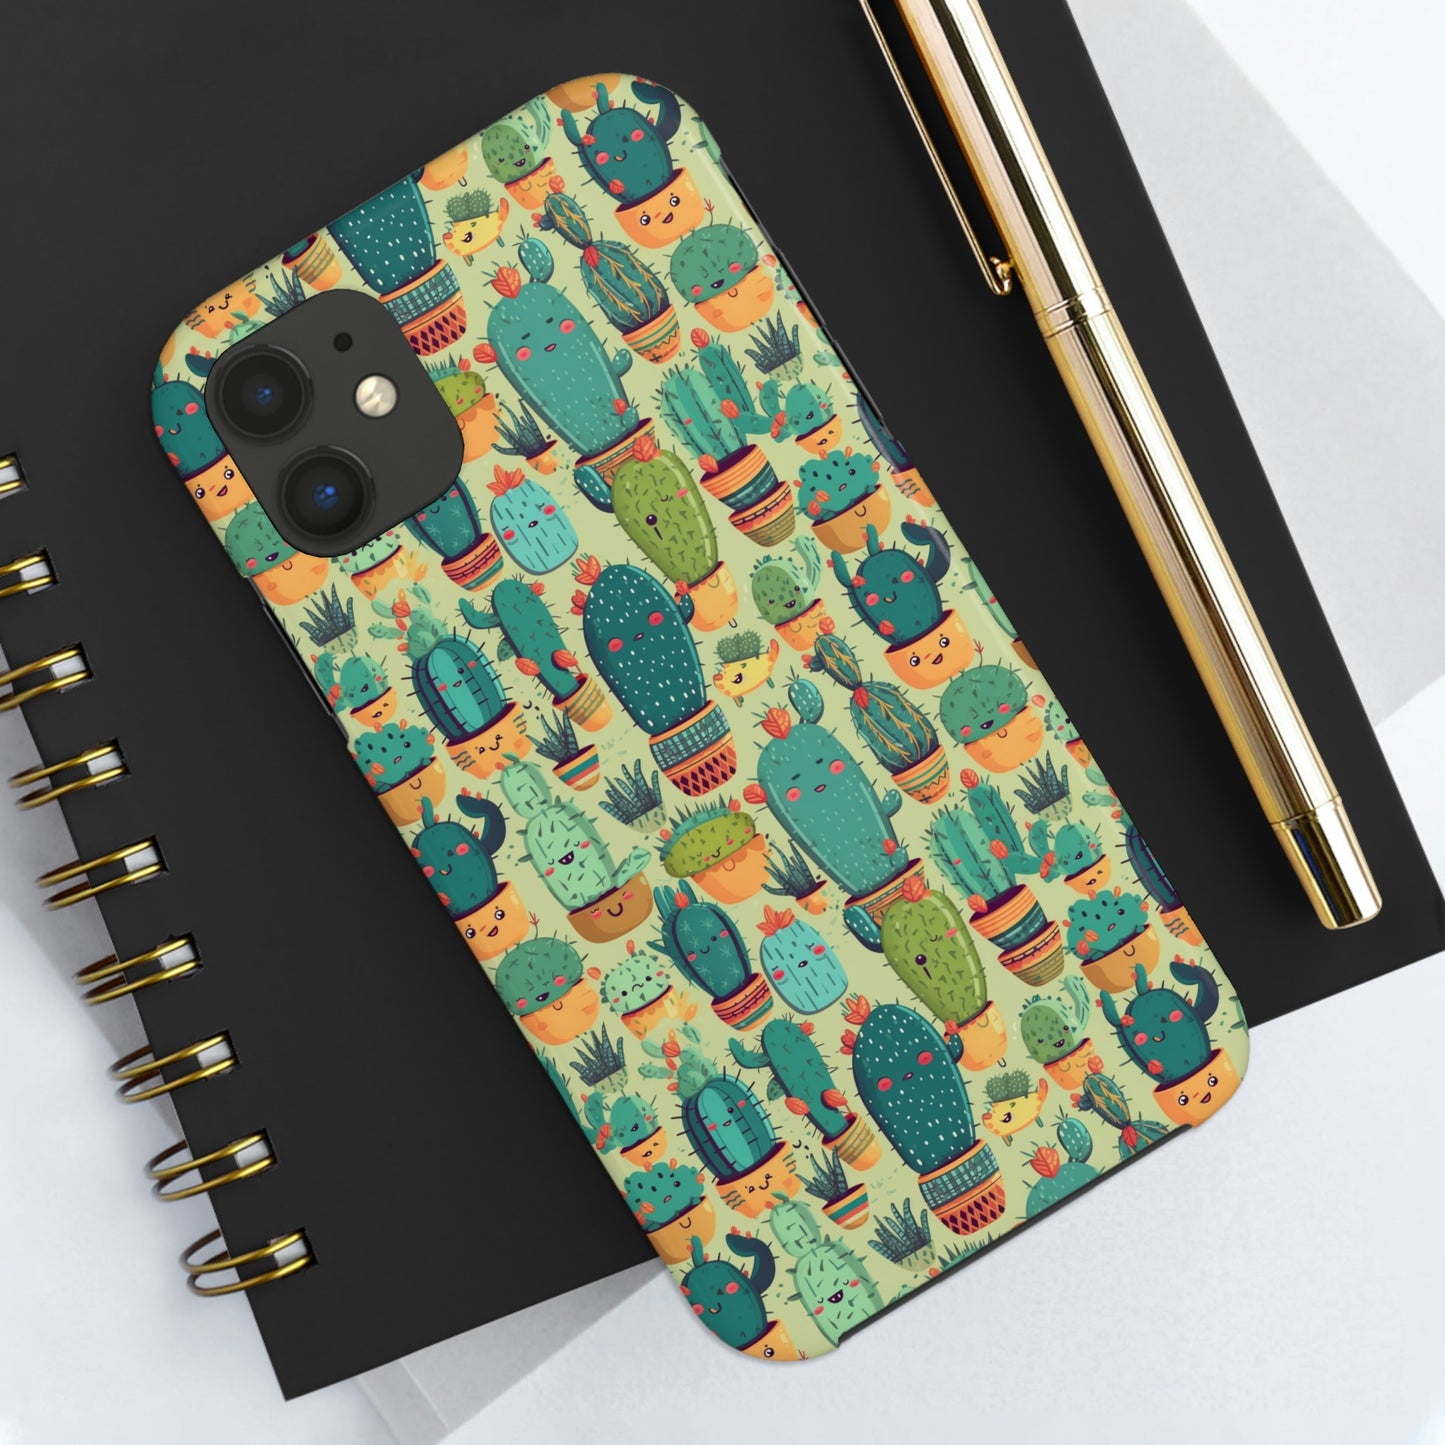 Cute Cactus pattern, Tough Phone Cases, Case-Mate